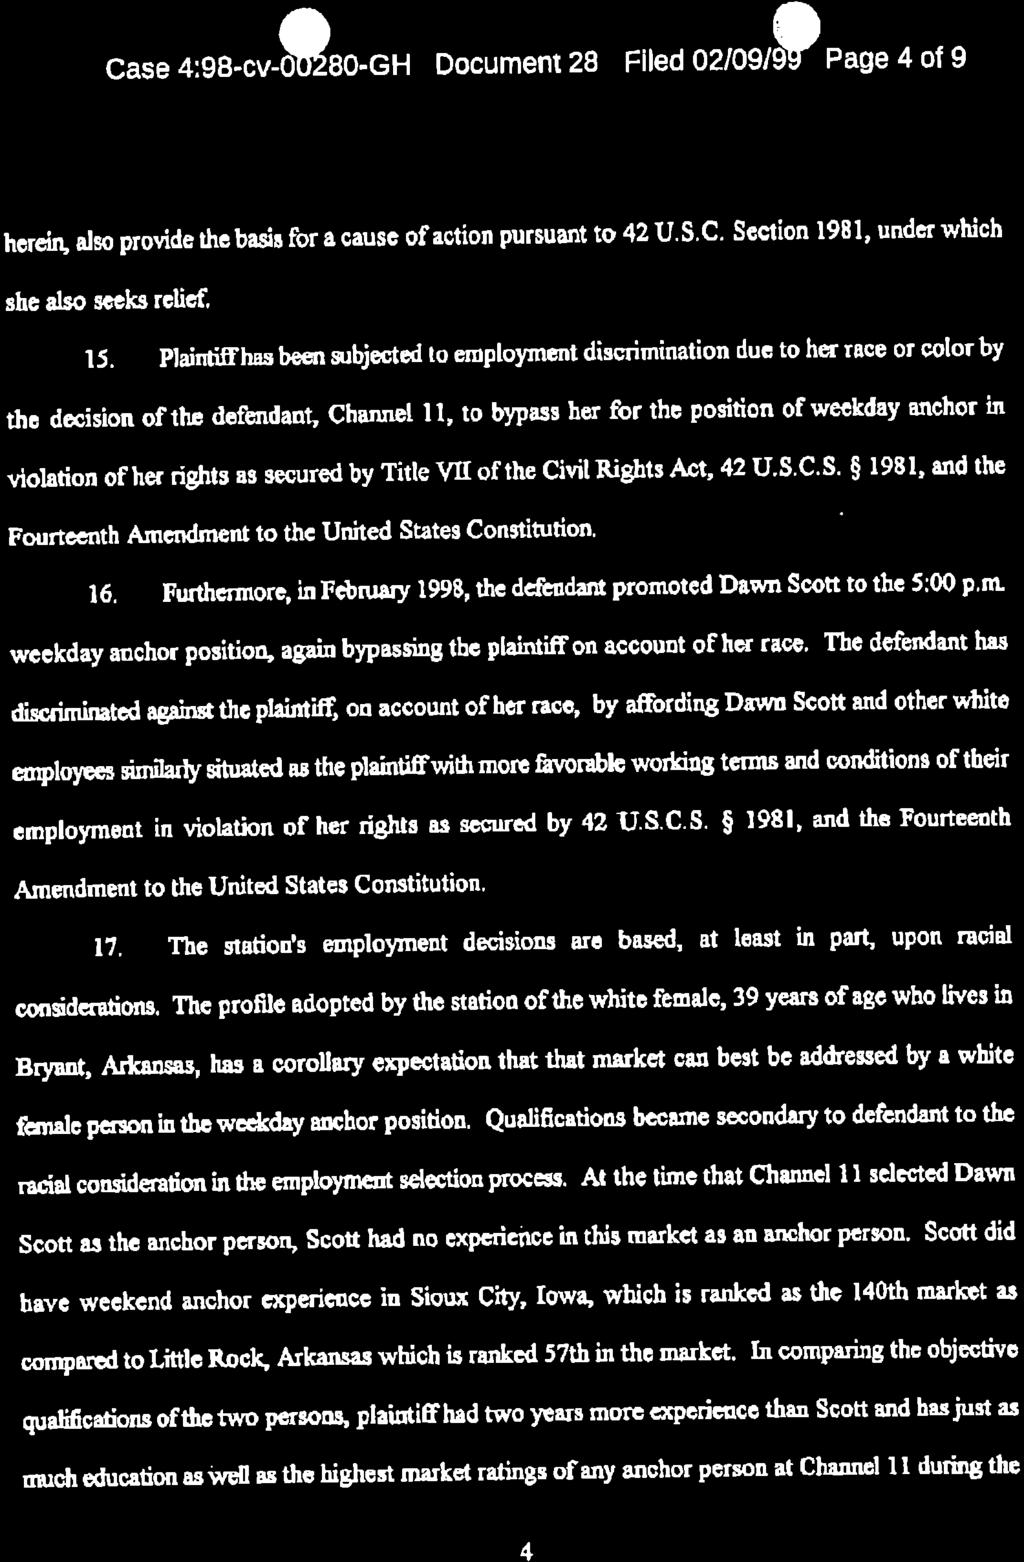 Case 4:14-cv-00107-JM Document